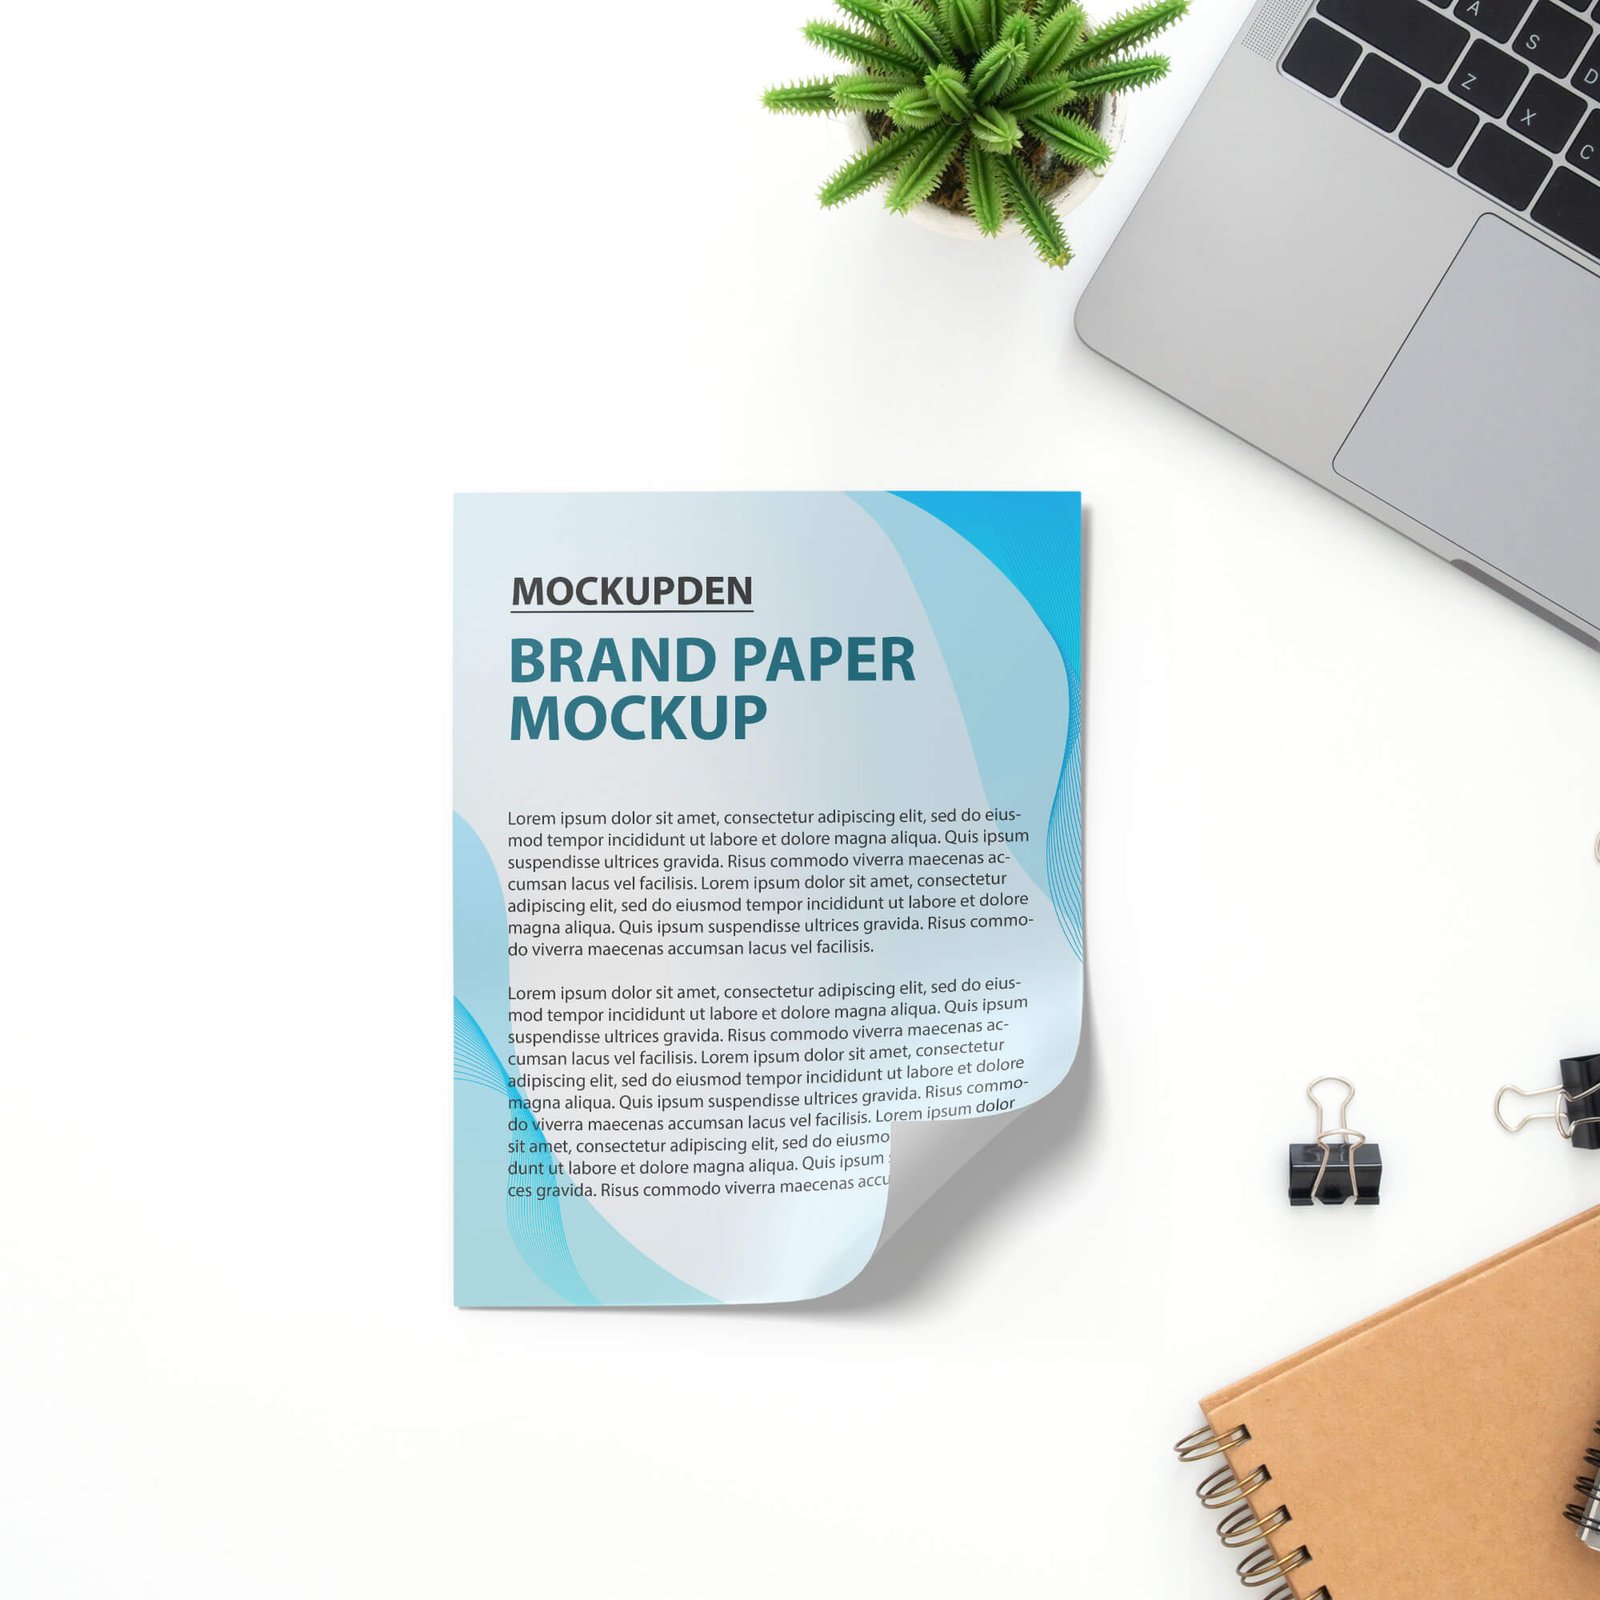 Free Brand Paper Mockup PSD Template